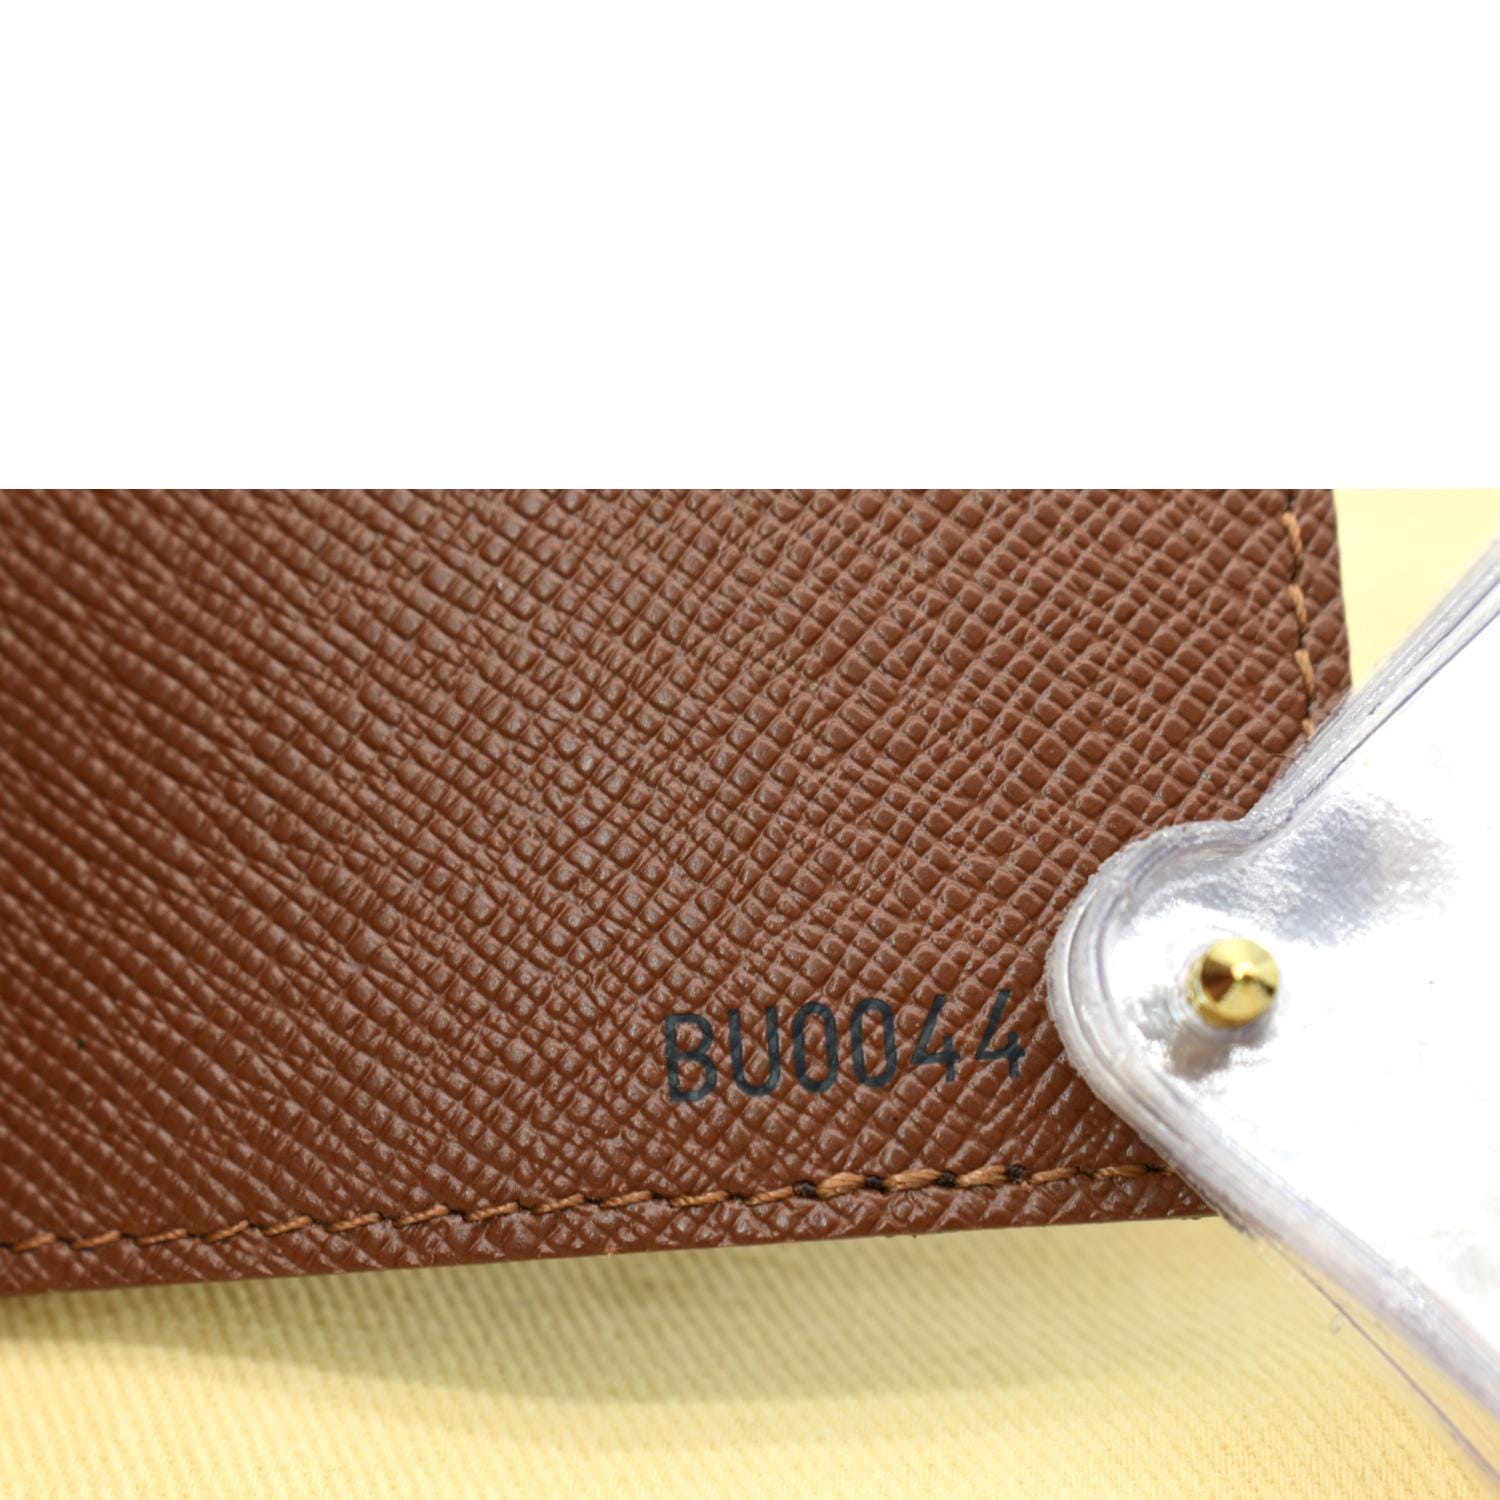 Louis Vuitton Card Holder - Brown Wallets, Accessories - LOU806573